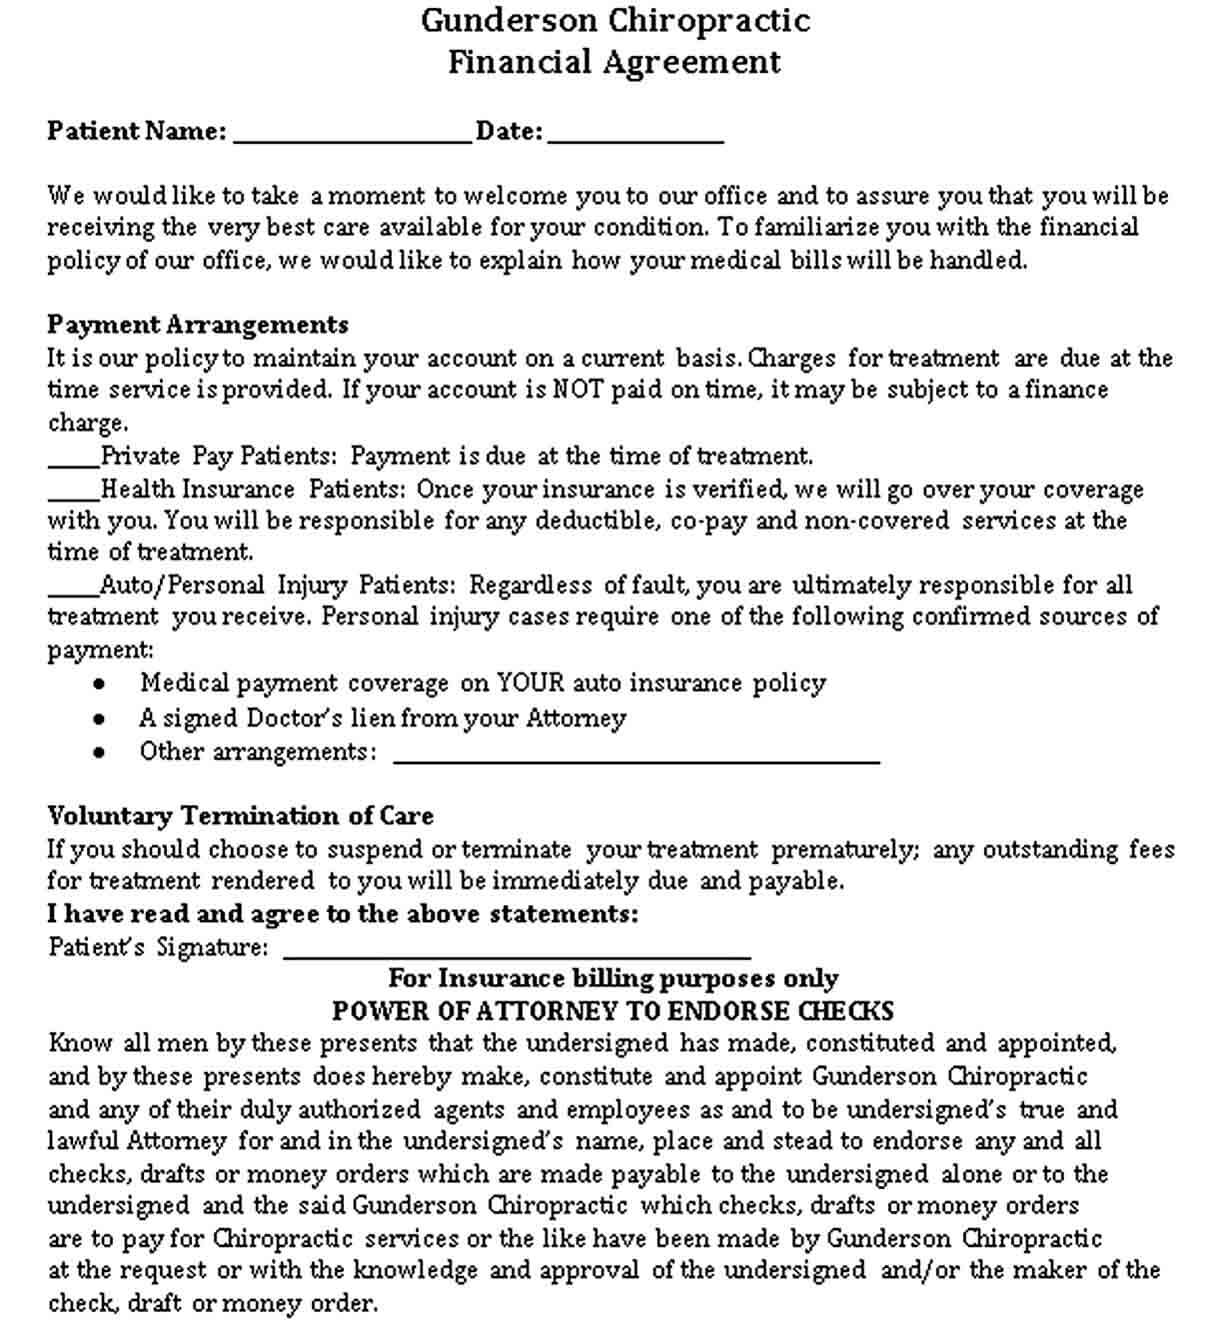 Sample Financial Agreement Cash Payment